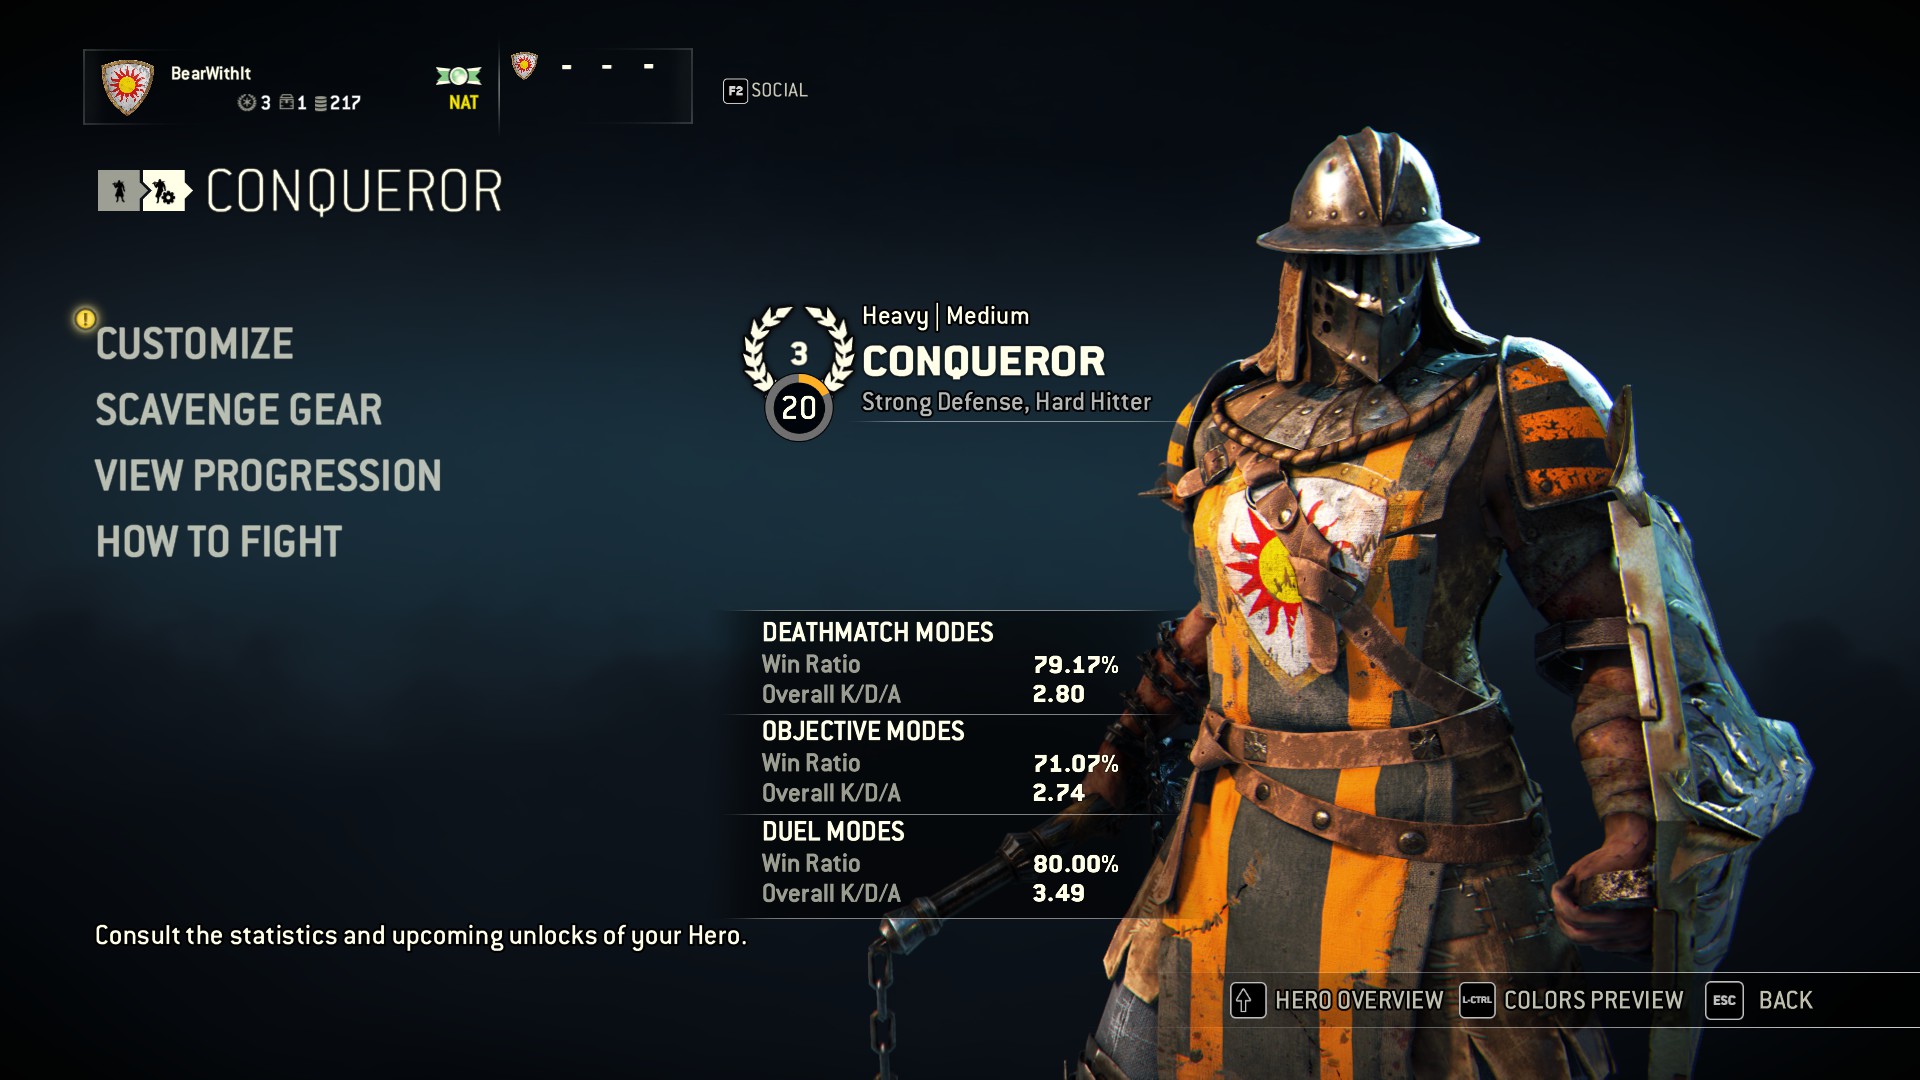 For honor conqueror gear guide